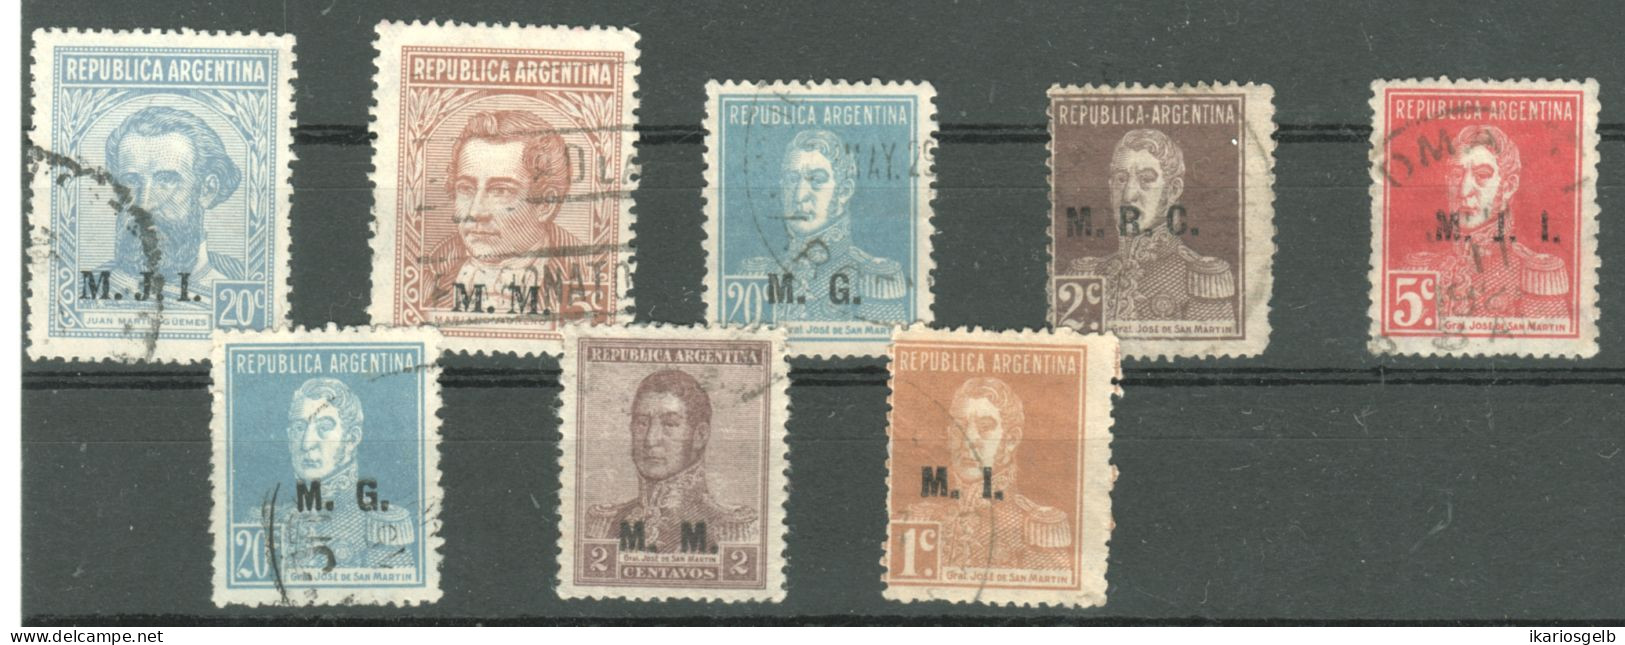 ARGENTINIEN Argentina ~1924 Lot 8 Marken + Ministerial-Aufdrucke M.I.I. - M.M. - M.G. - M.I. = Ministry Overprints - Service